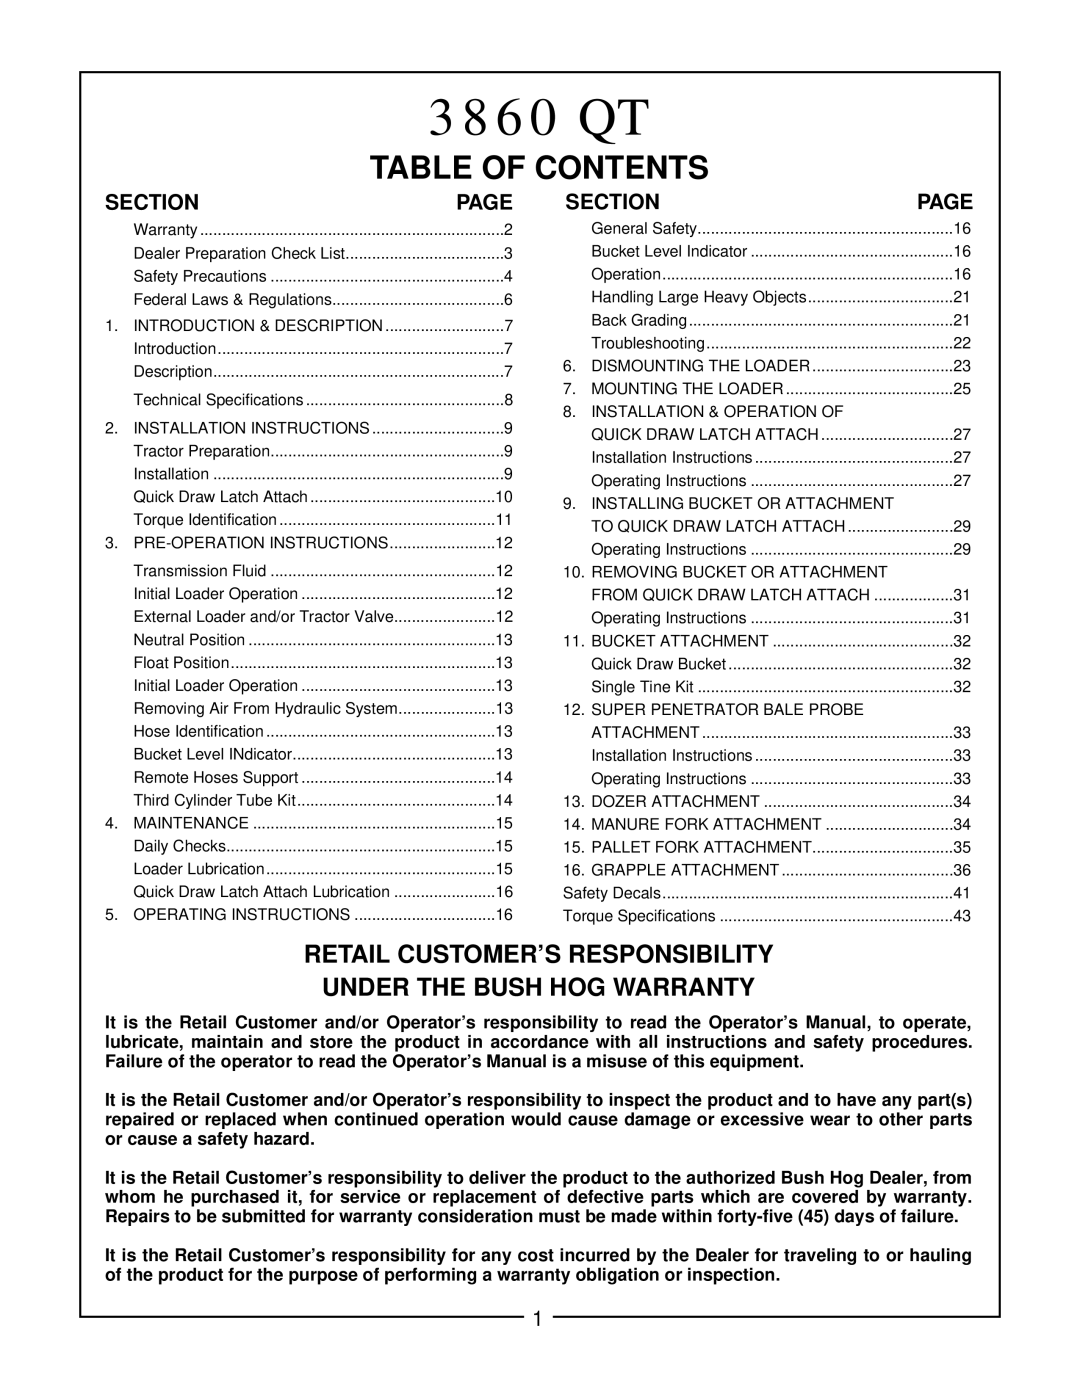 Bush Hog 3860 QT manual Table Of Contents, Retail Customer’S Responsibility Under The Bush Hog Warranty, Page 